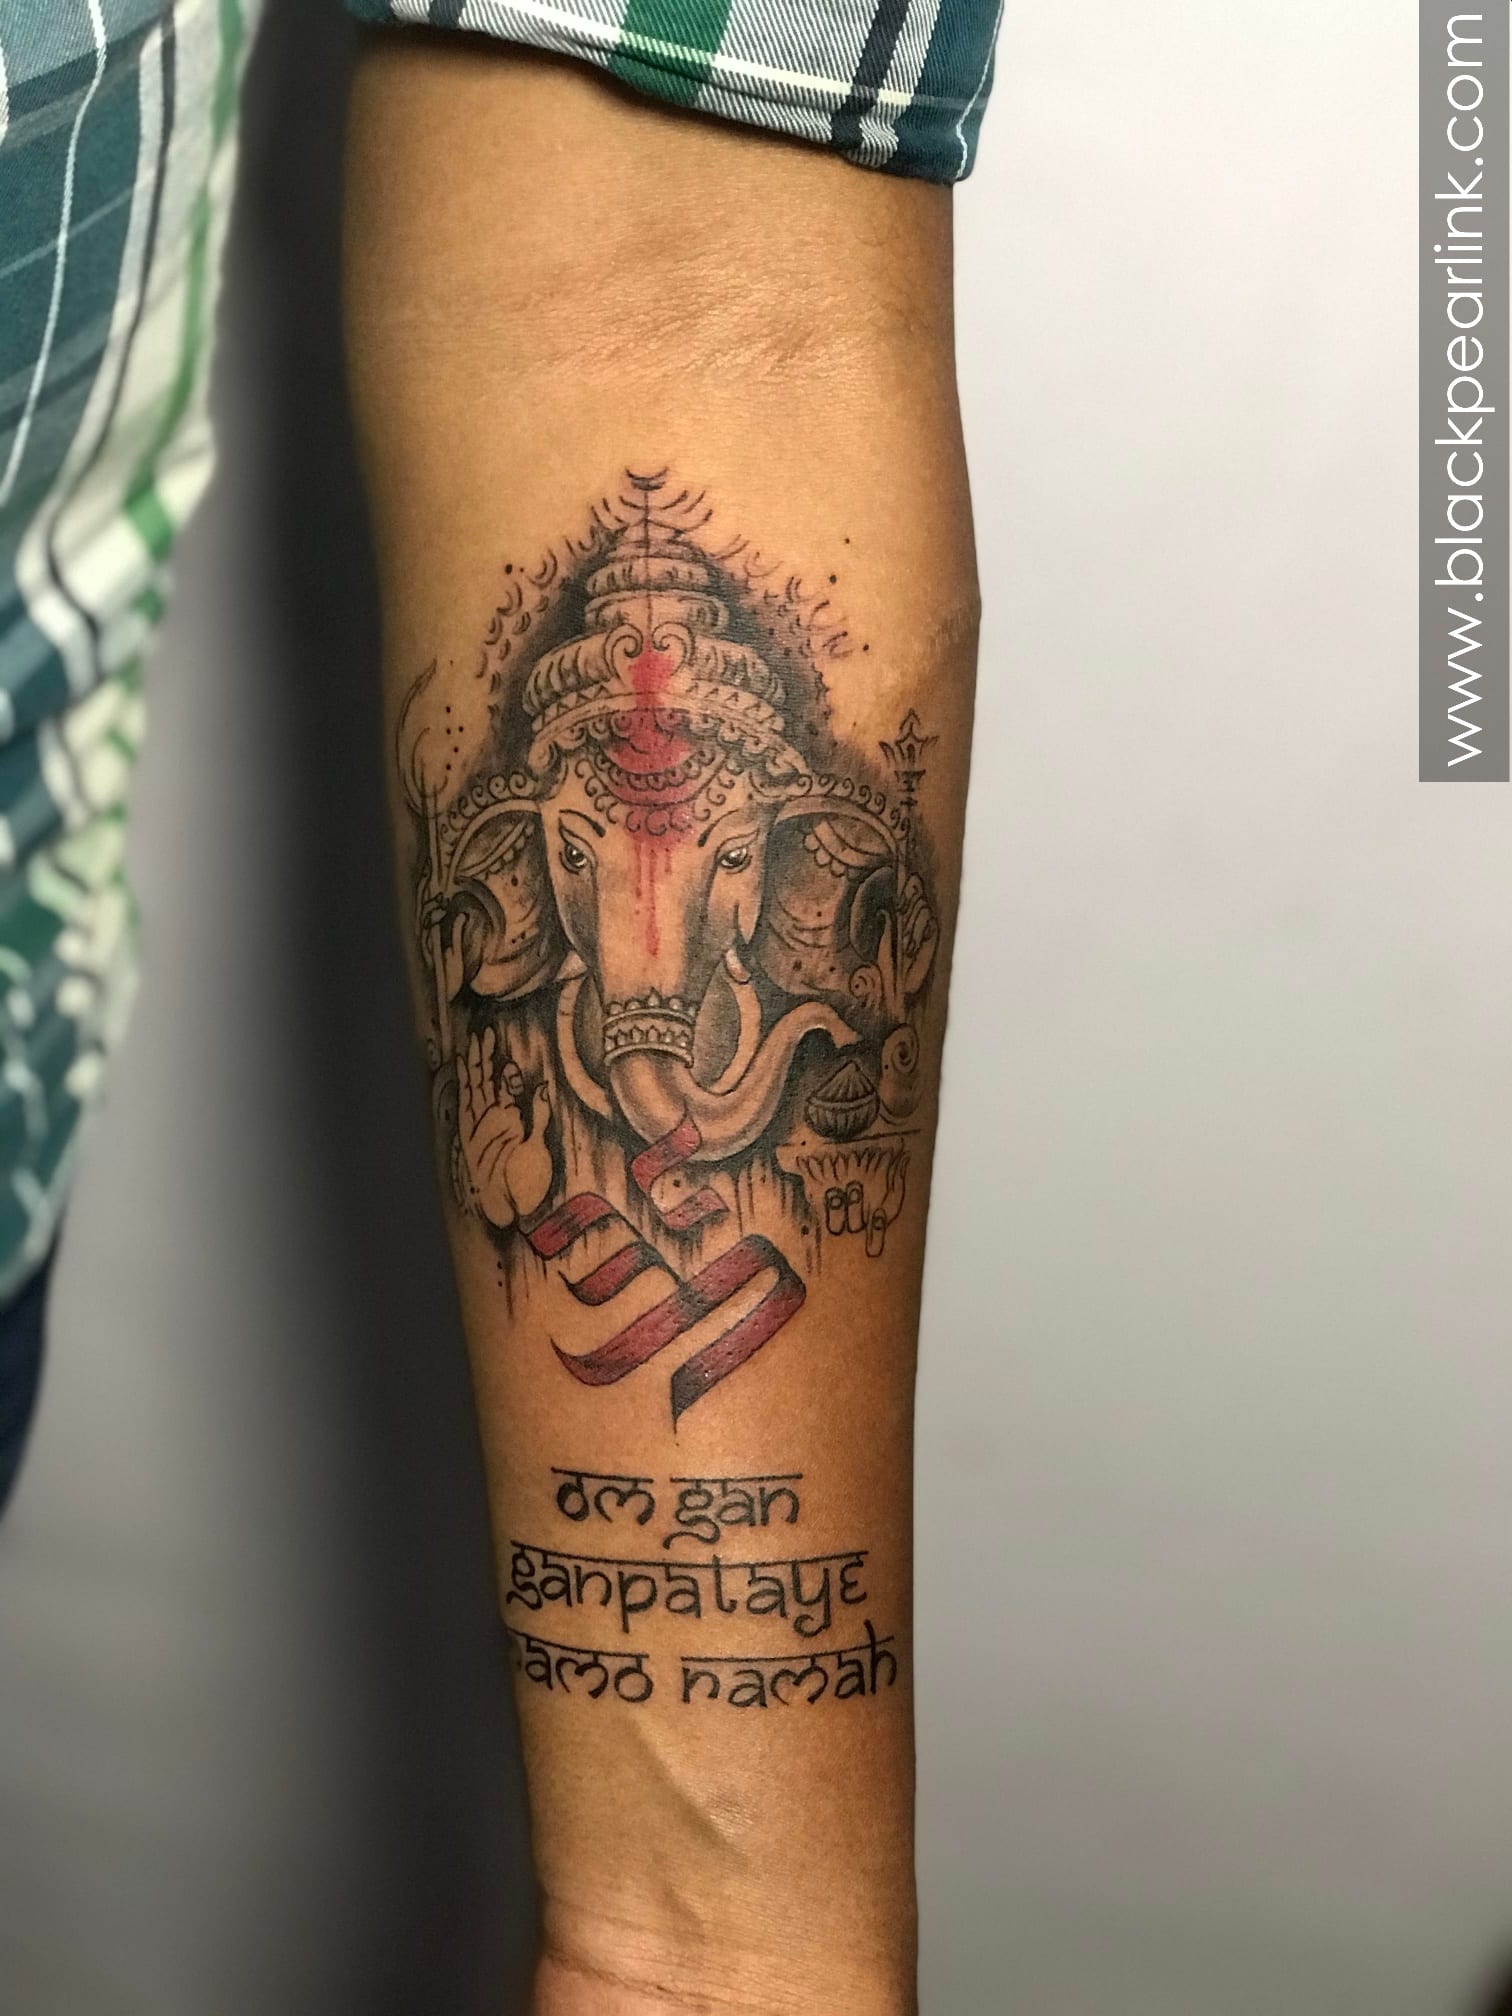 Ganesha tattoo with Shree Ganesh Mantra